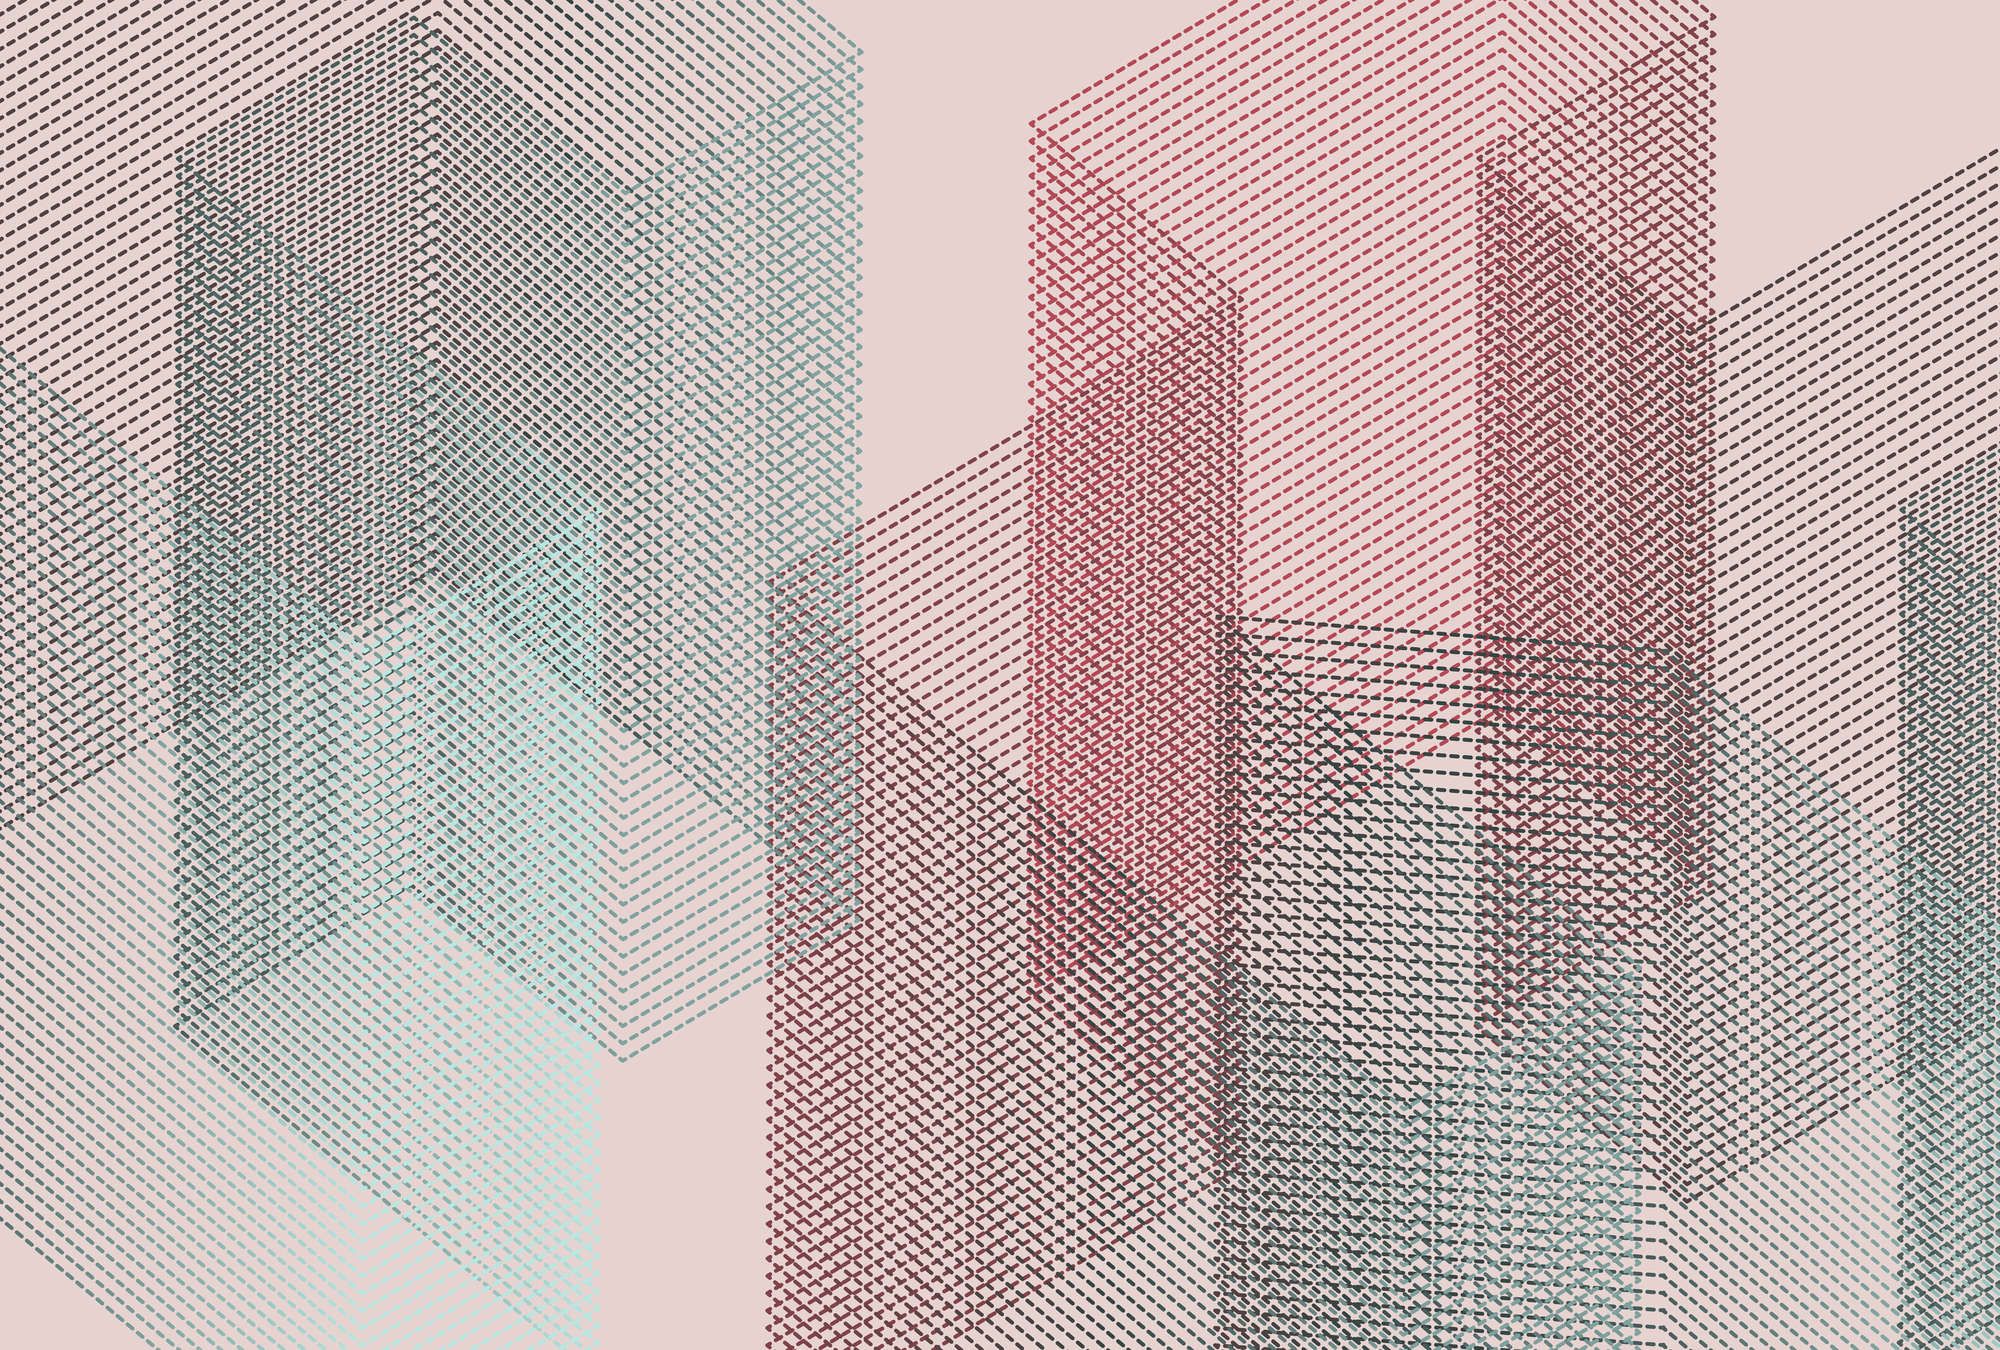             Fototapete »mesh 1« - Abstraktes 3D-Design – Rot, Blau | Mattes, Glattes Vlies
        